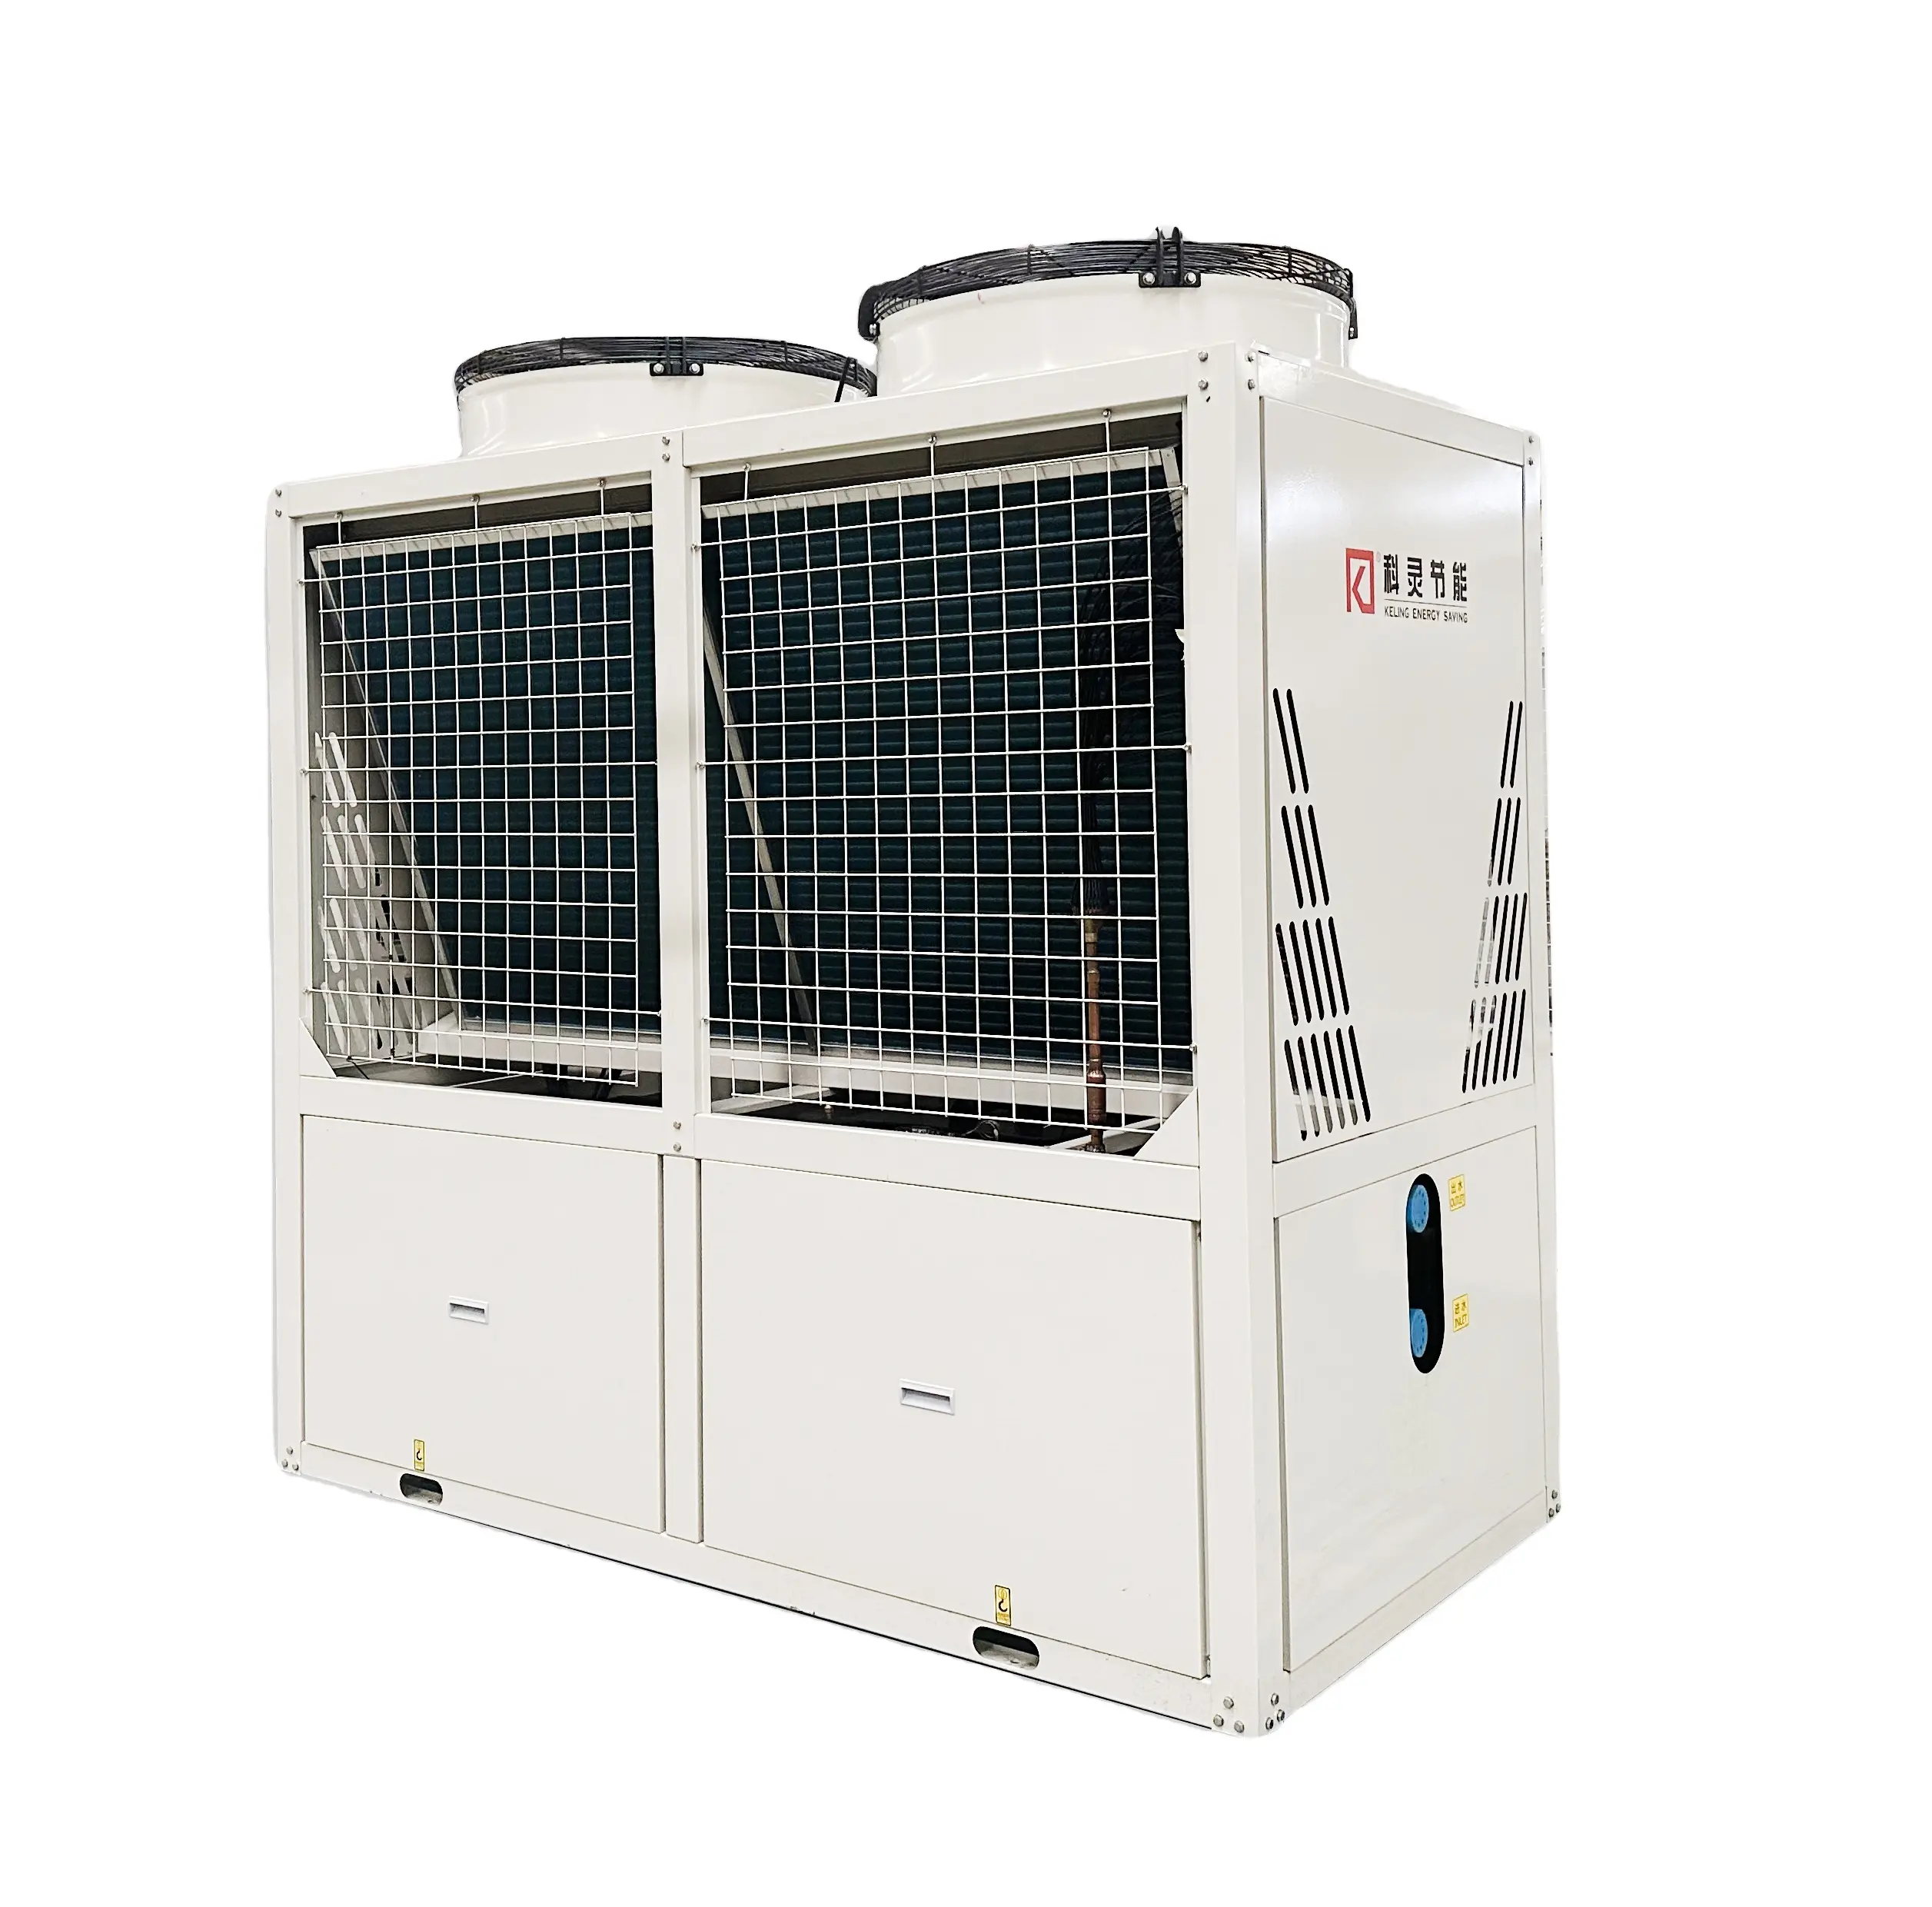 Hvac 시스템용 상업용 공랭식 냉각기 제조업체 산업 및 농업 냉각 시스템